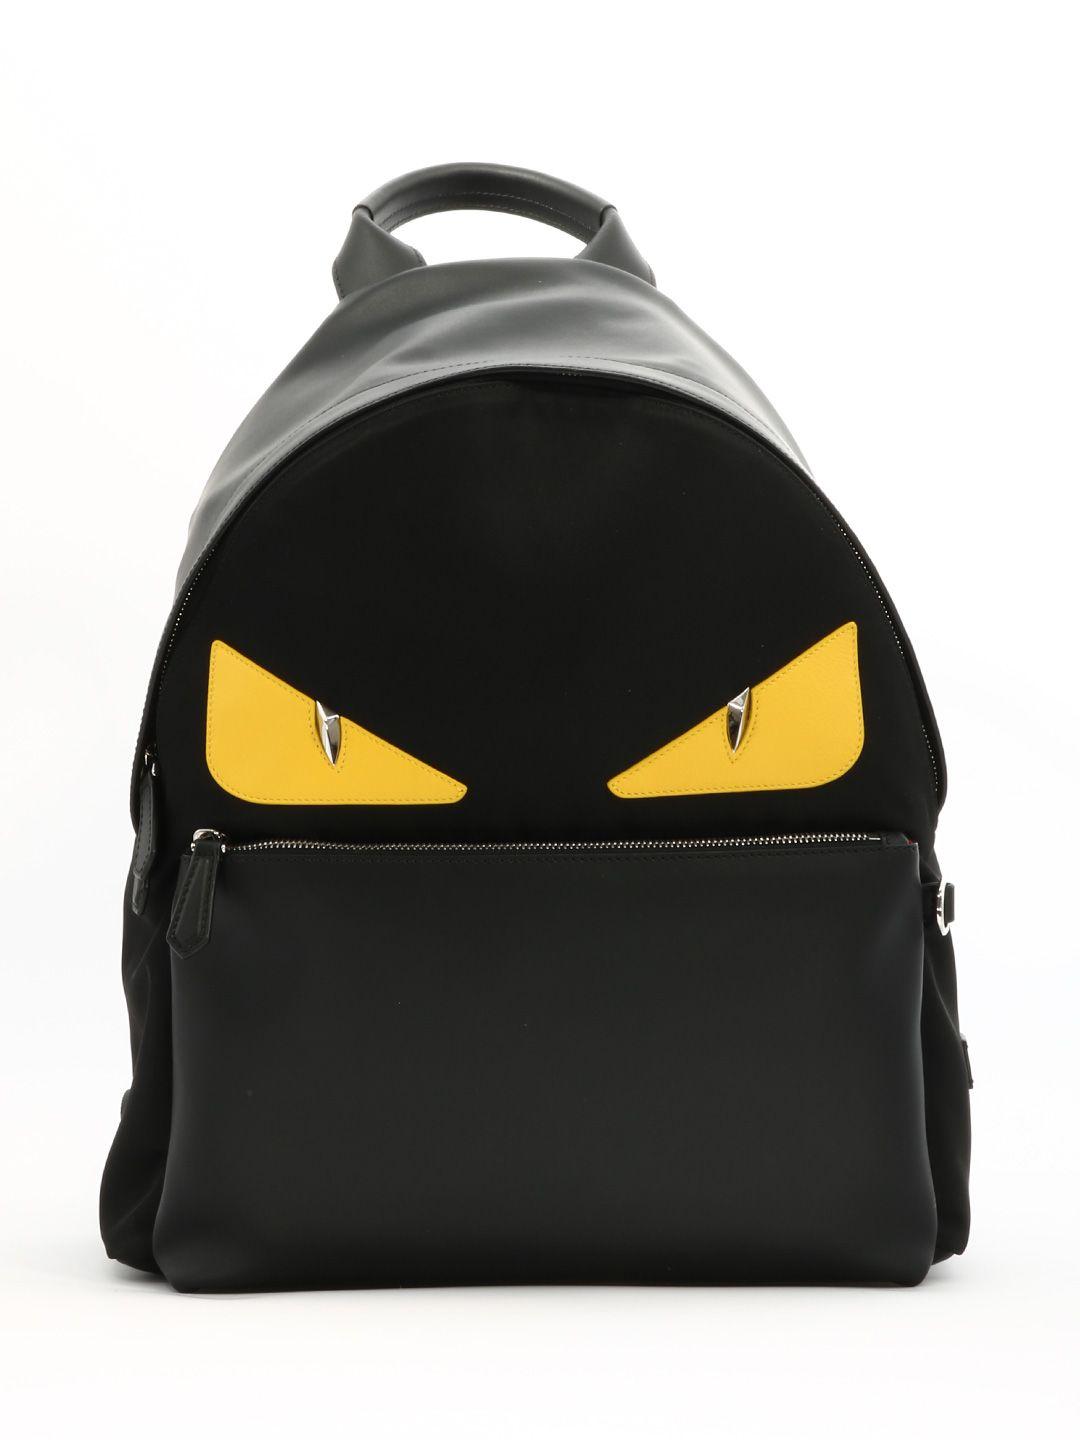 Fendi Black Backpack Yellow Eyes | ModeSens